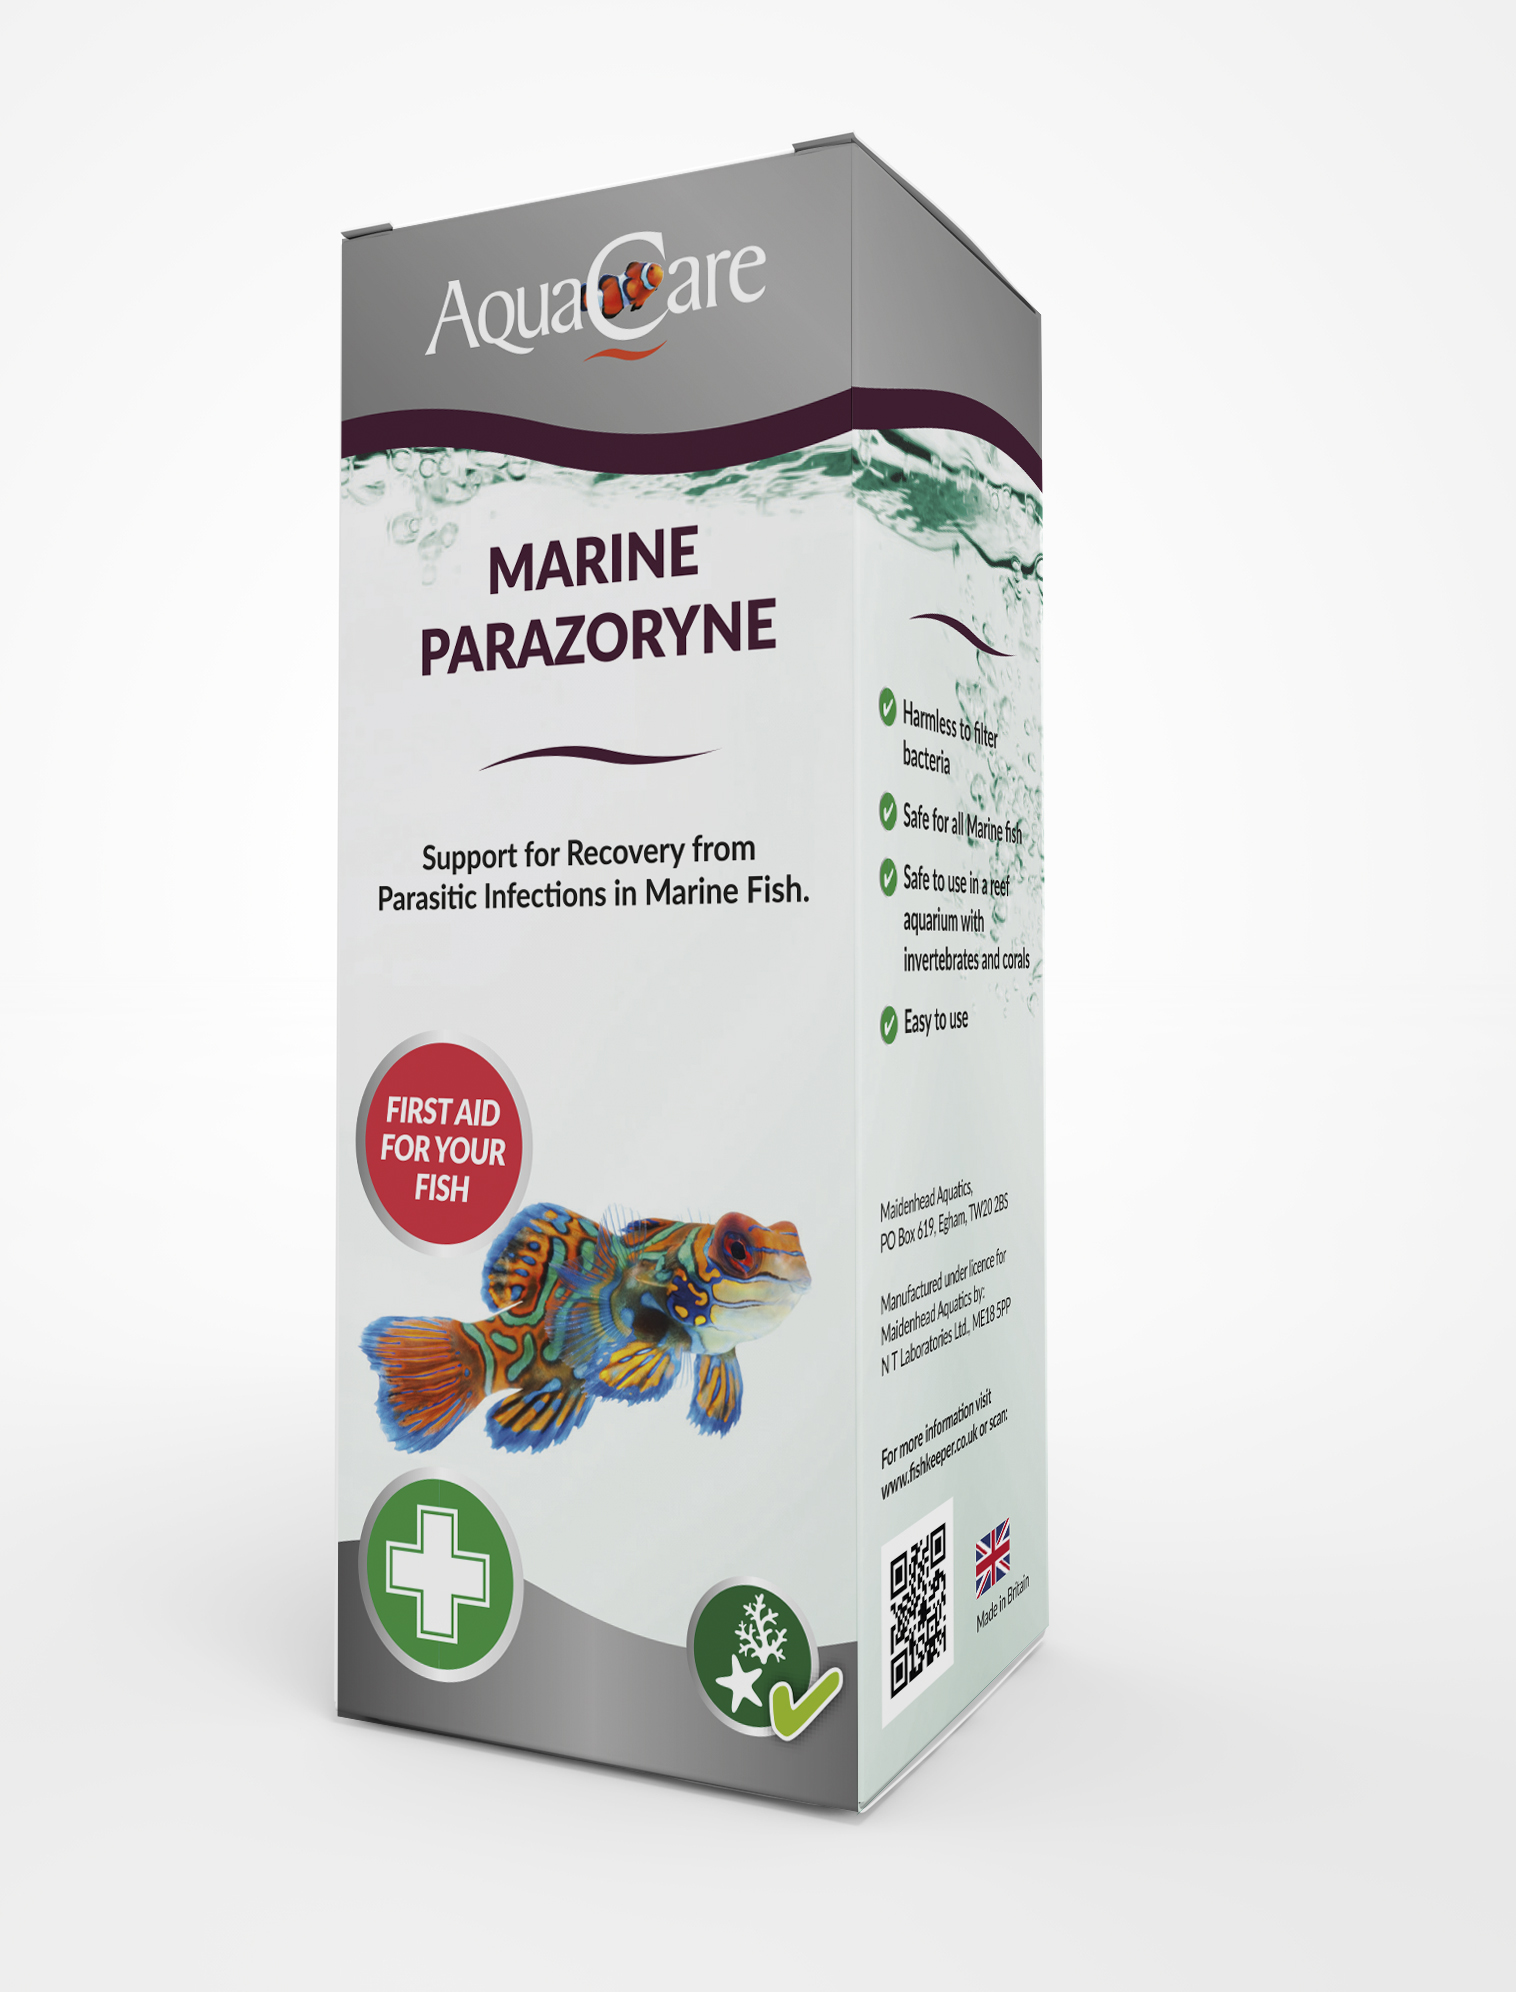 aquacare-marine-parazoryne-1479811201.jpg